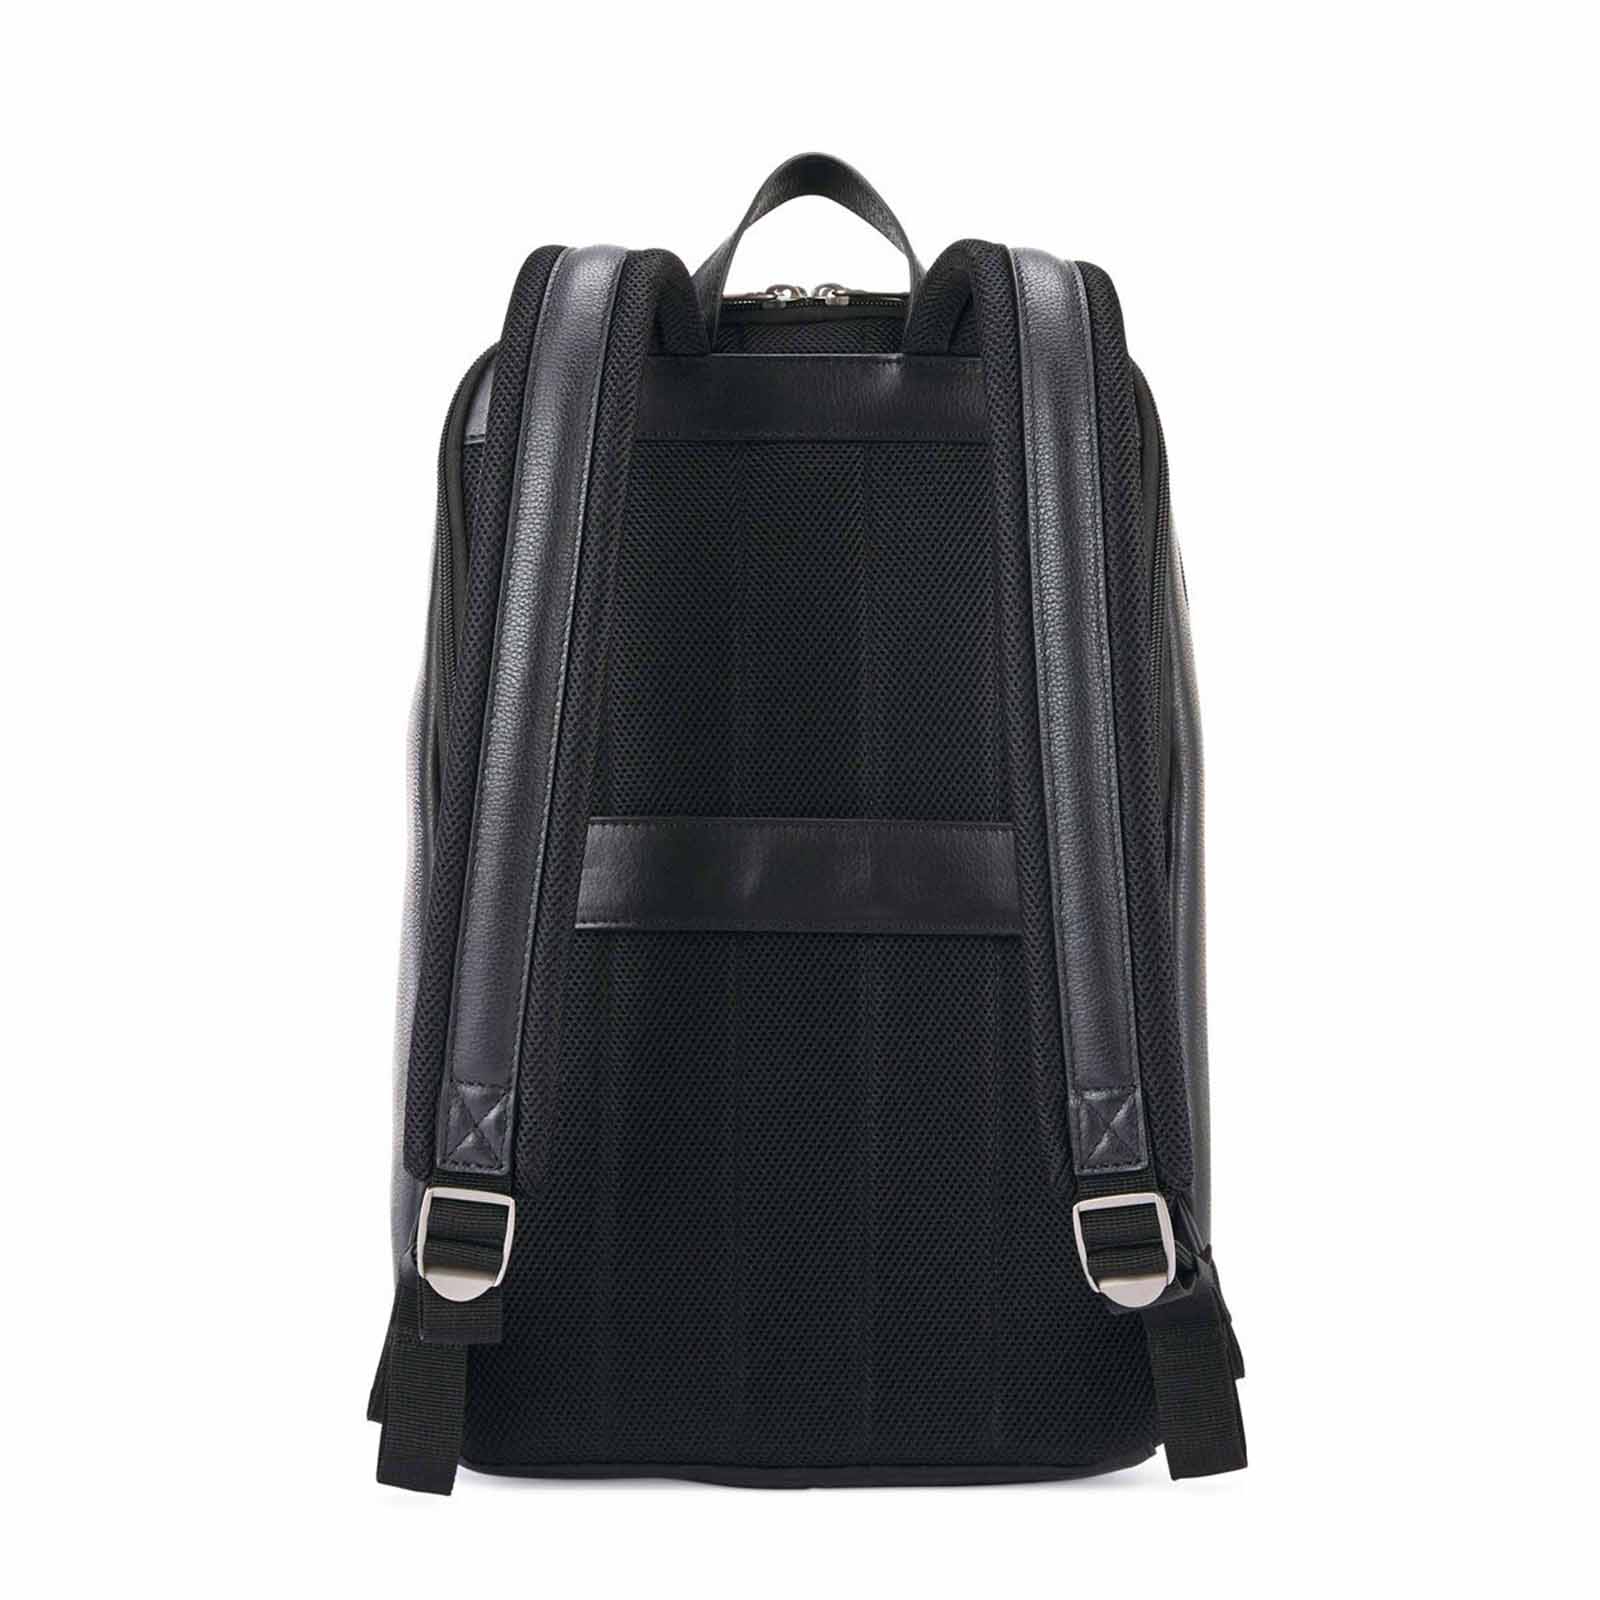 Samsonite-Classic-Leather-14-Inch-Laptop-Backpack-Black-Back